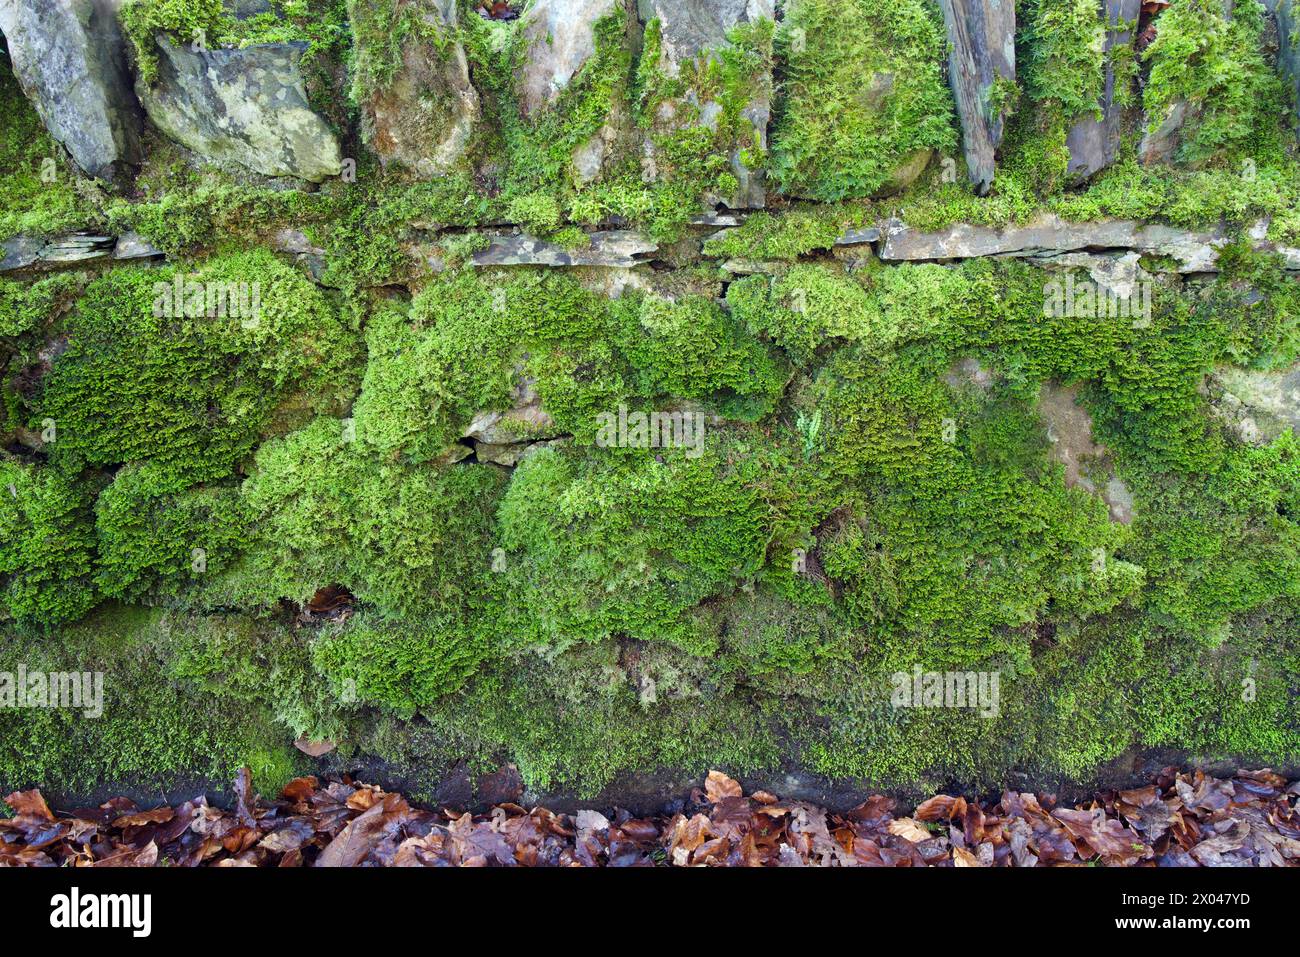 This mossy wall is on Lon Ddinas lane in North Wales near Tregarth. The species include Ctenidium molluscum and Porella platyphylla. Stock Photo